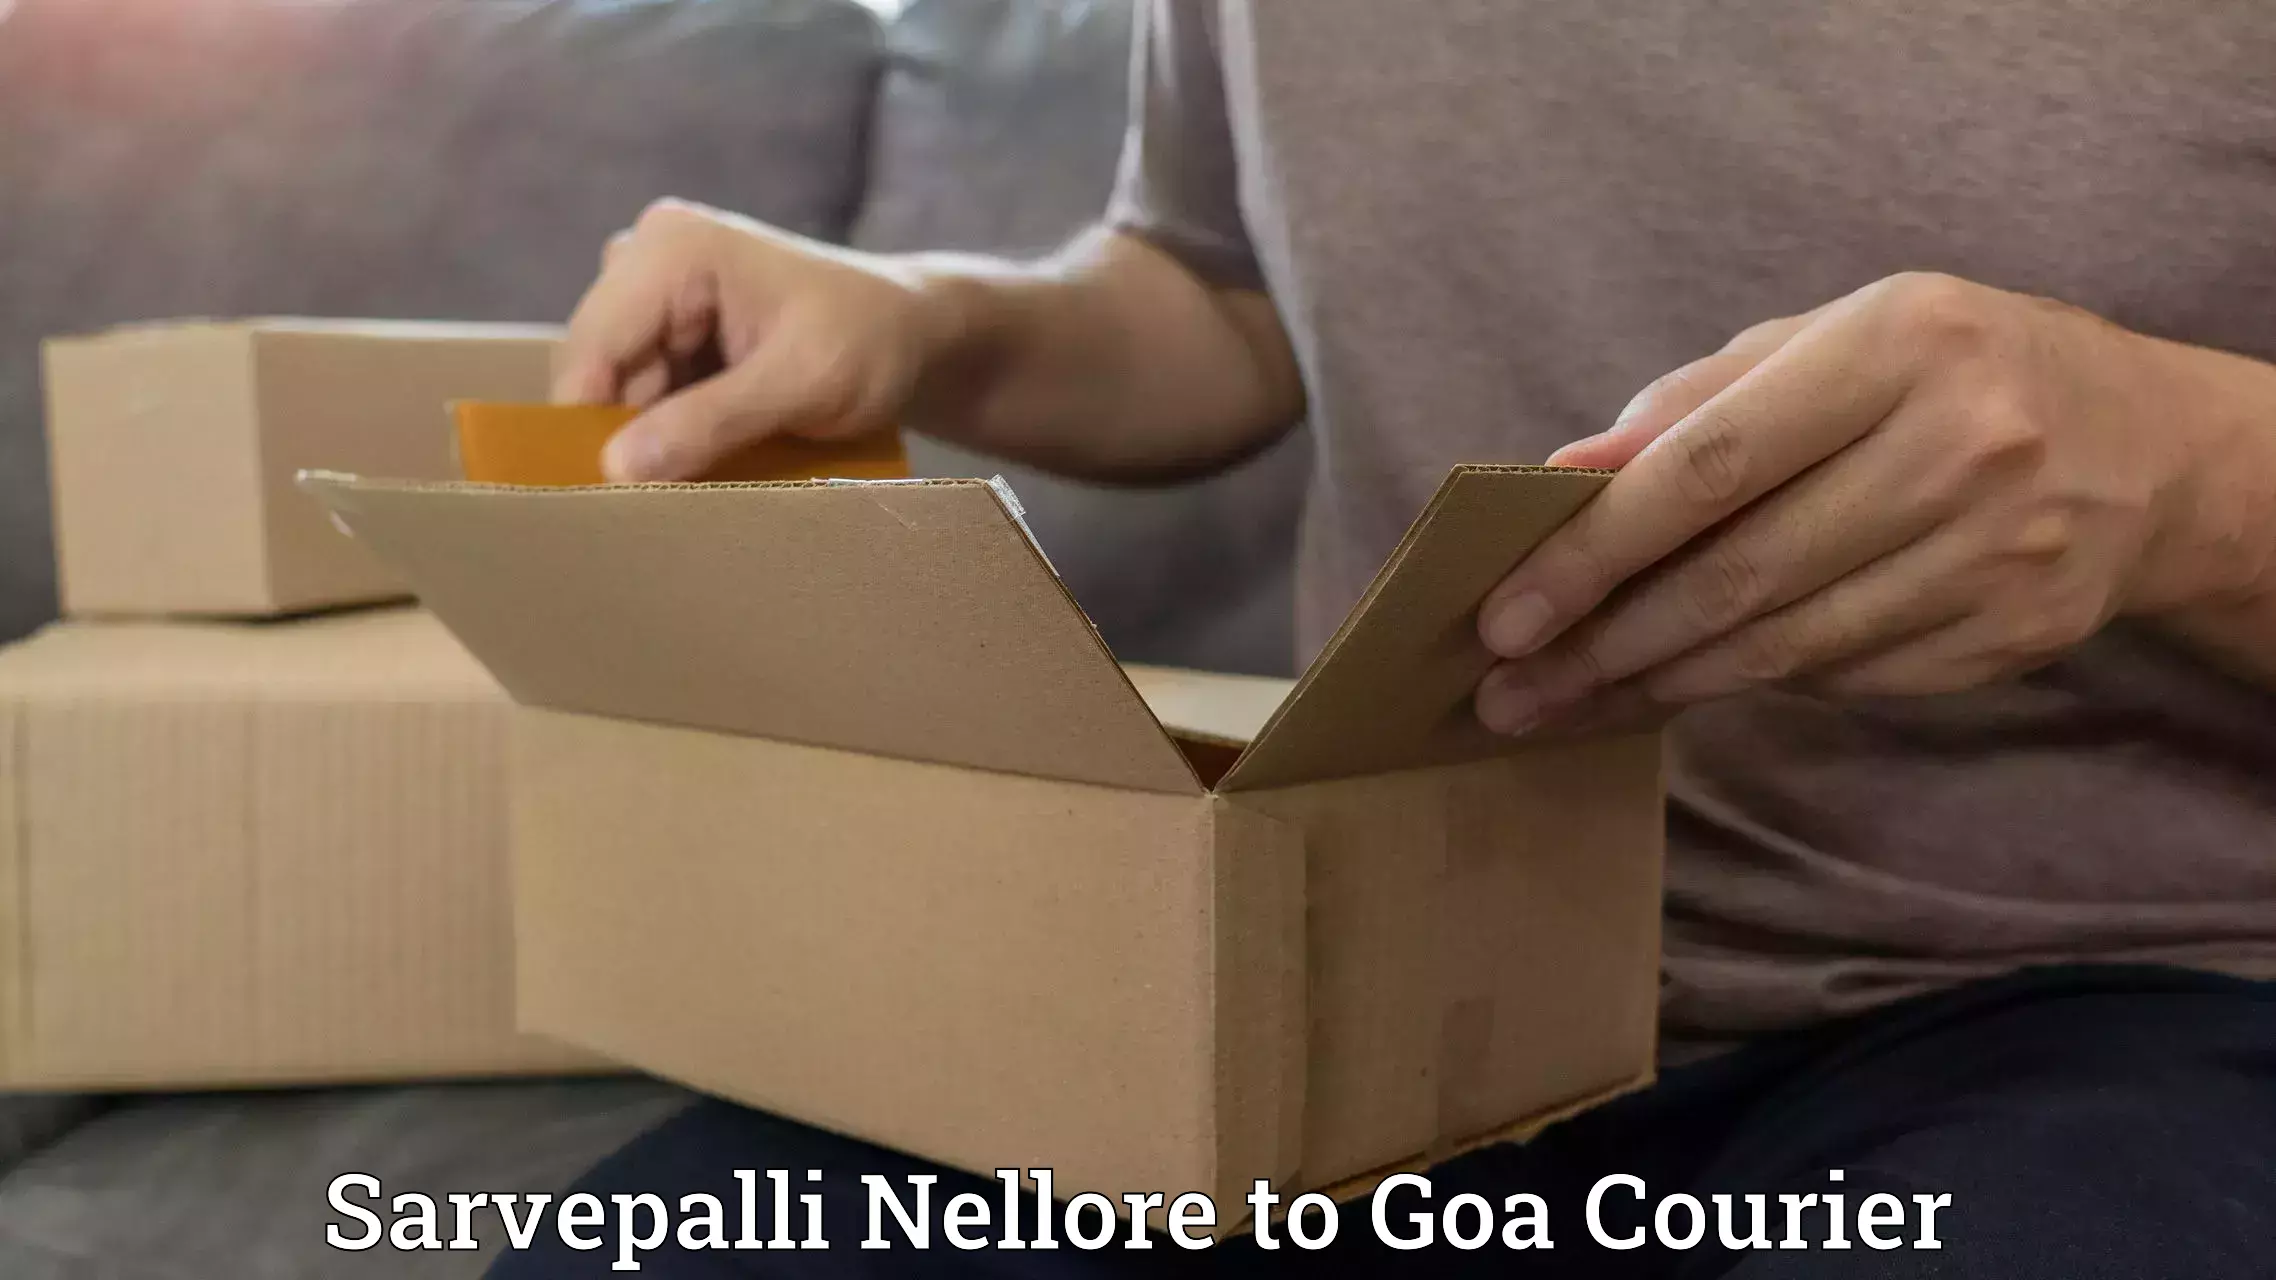 Easy return solutions Sarvepalli Nellore to South Goa